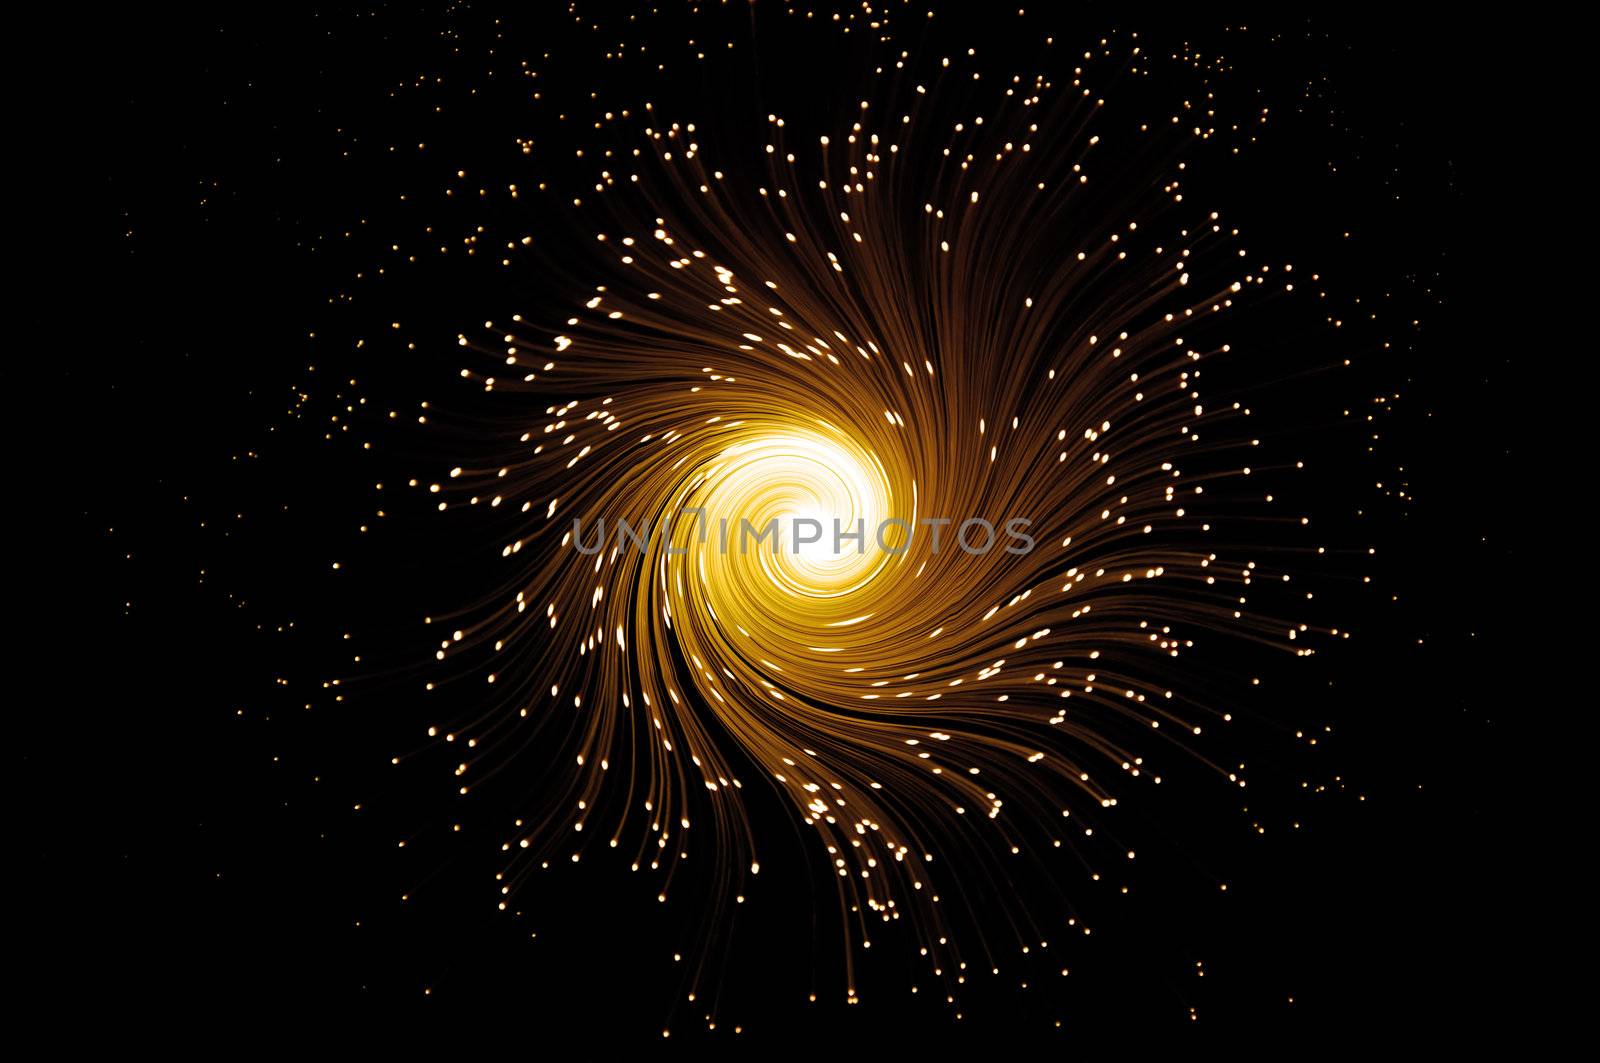 Golden telecommunications swirl by 72soul